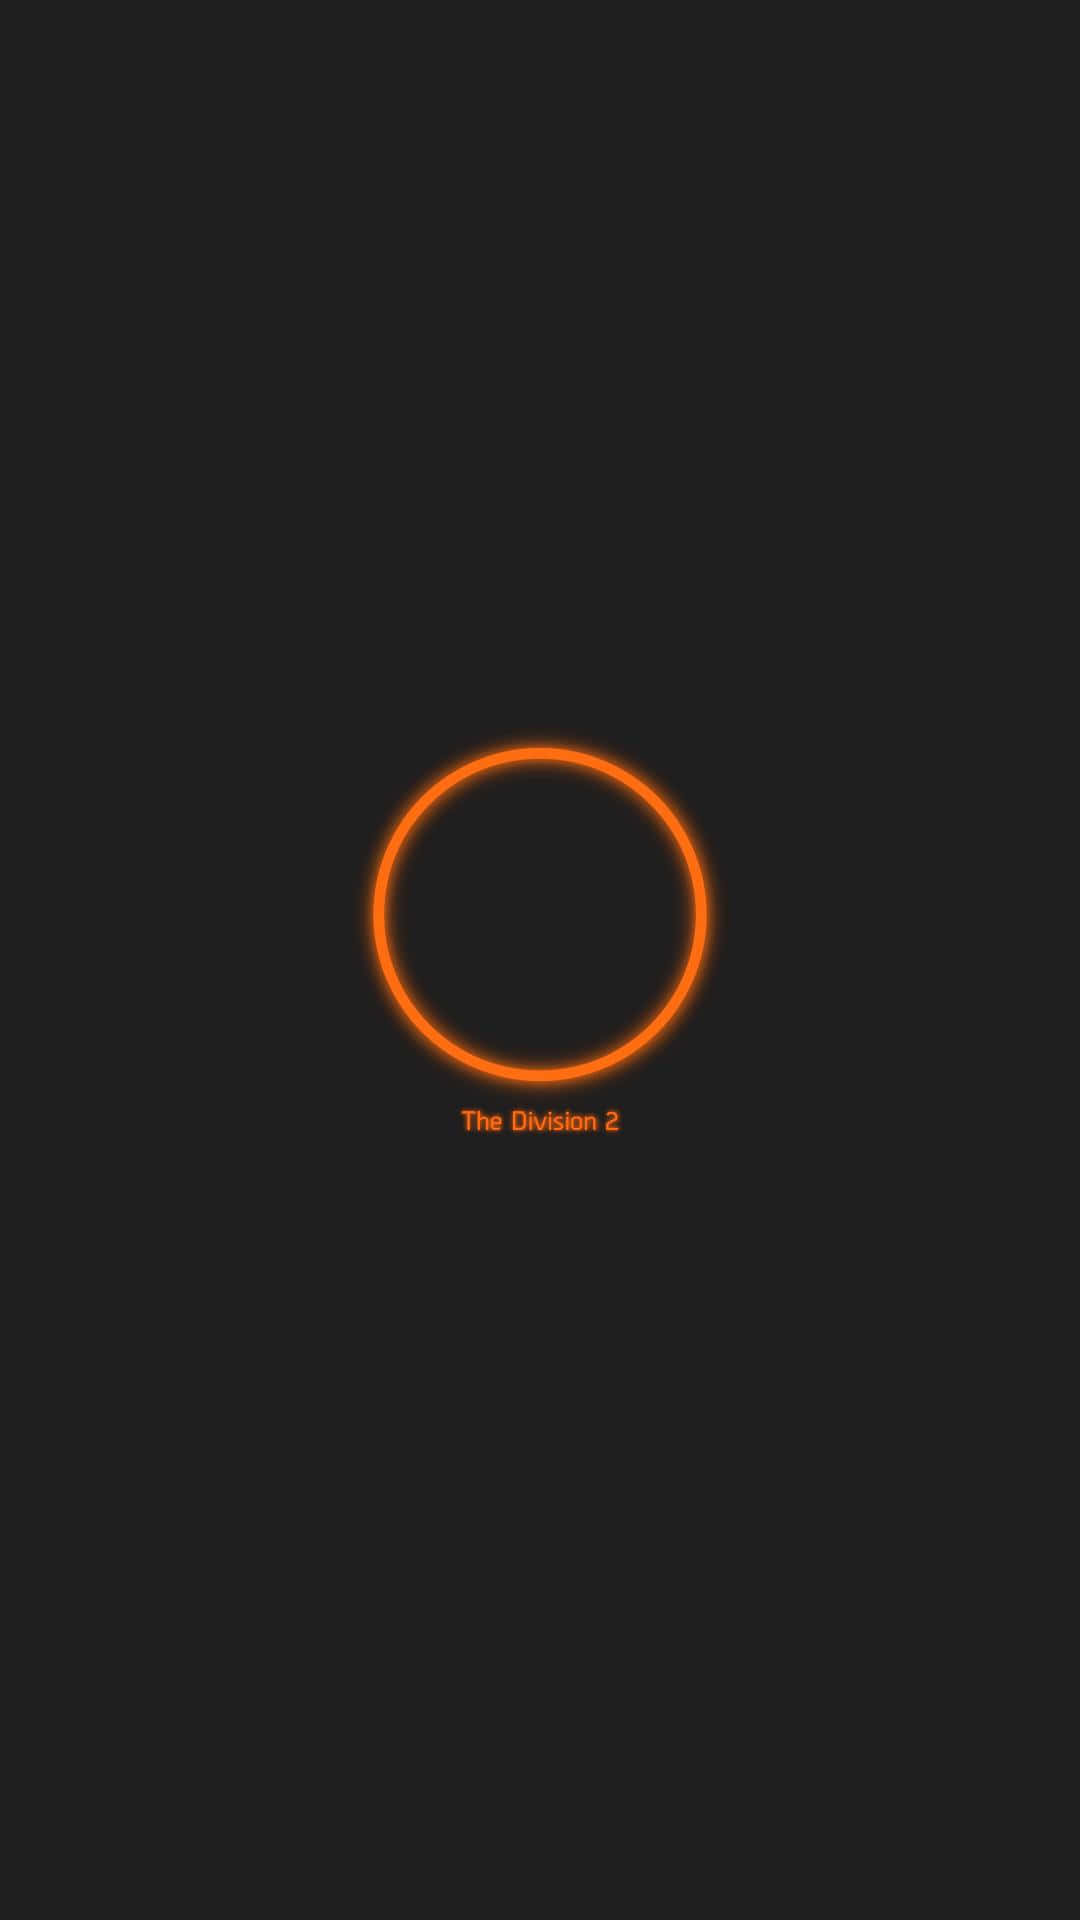 Orangelogo Android The Division Bakgrundsbild.